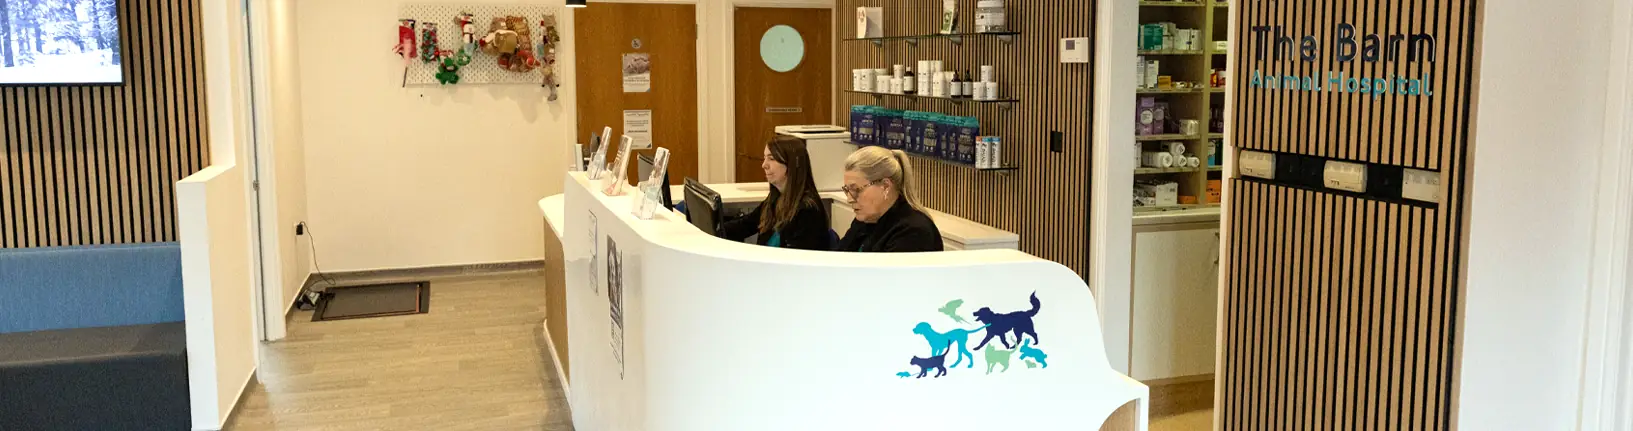 About The Barn Animal Hospital in Basingstoke